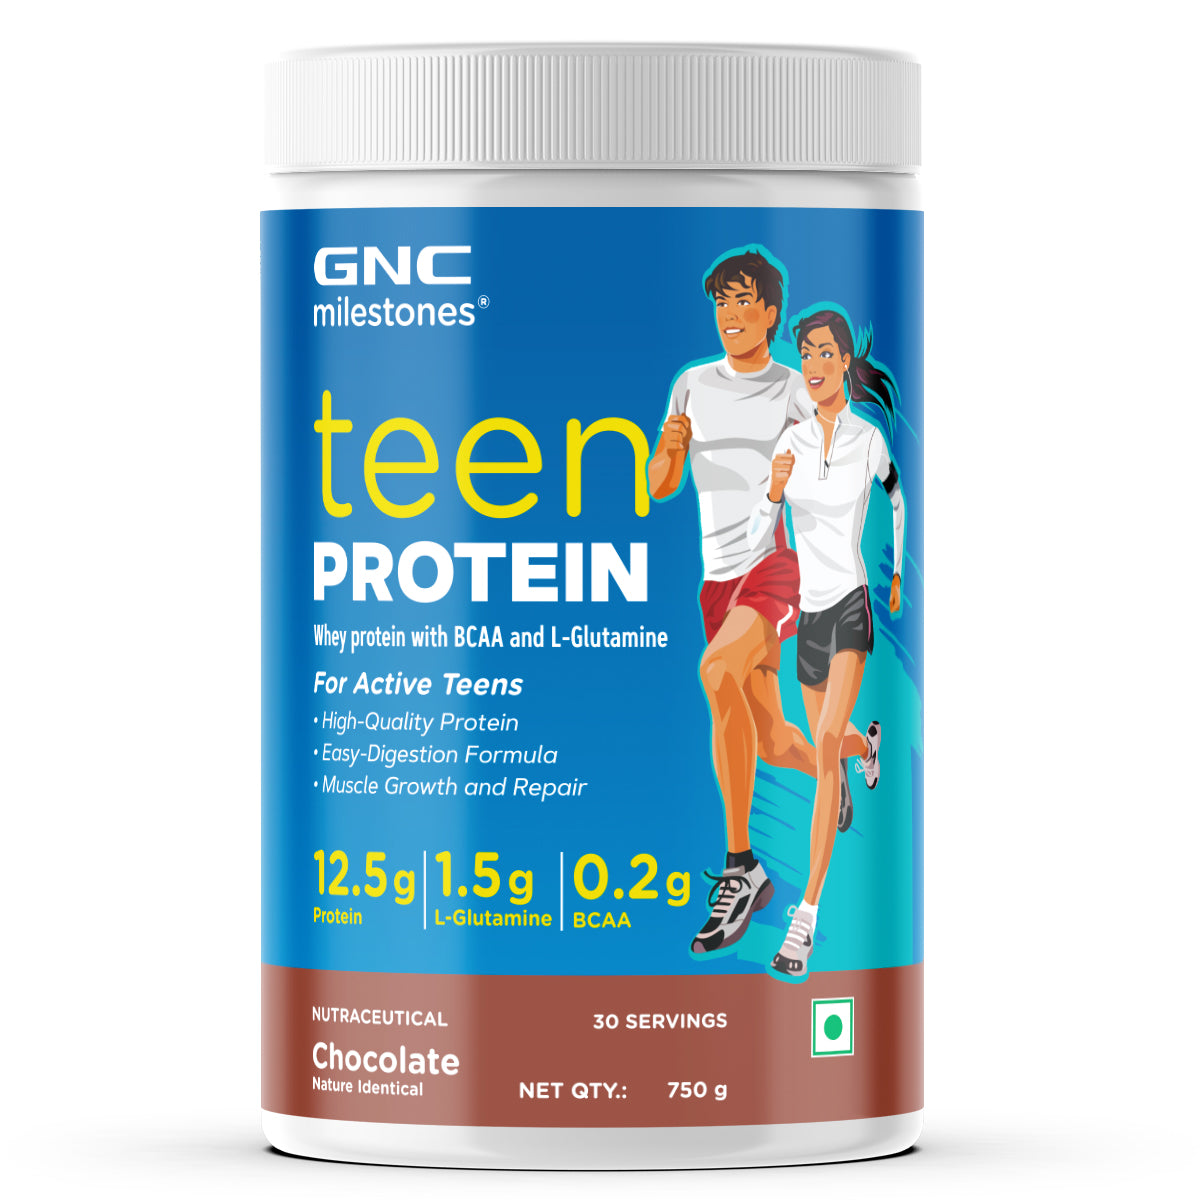 GNC milestones Teen Protein | Boosts Athletic Performance & Potential In Active Teens